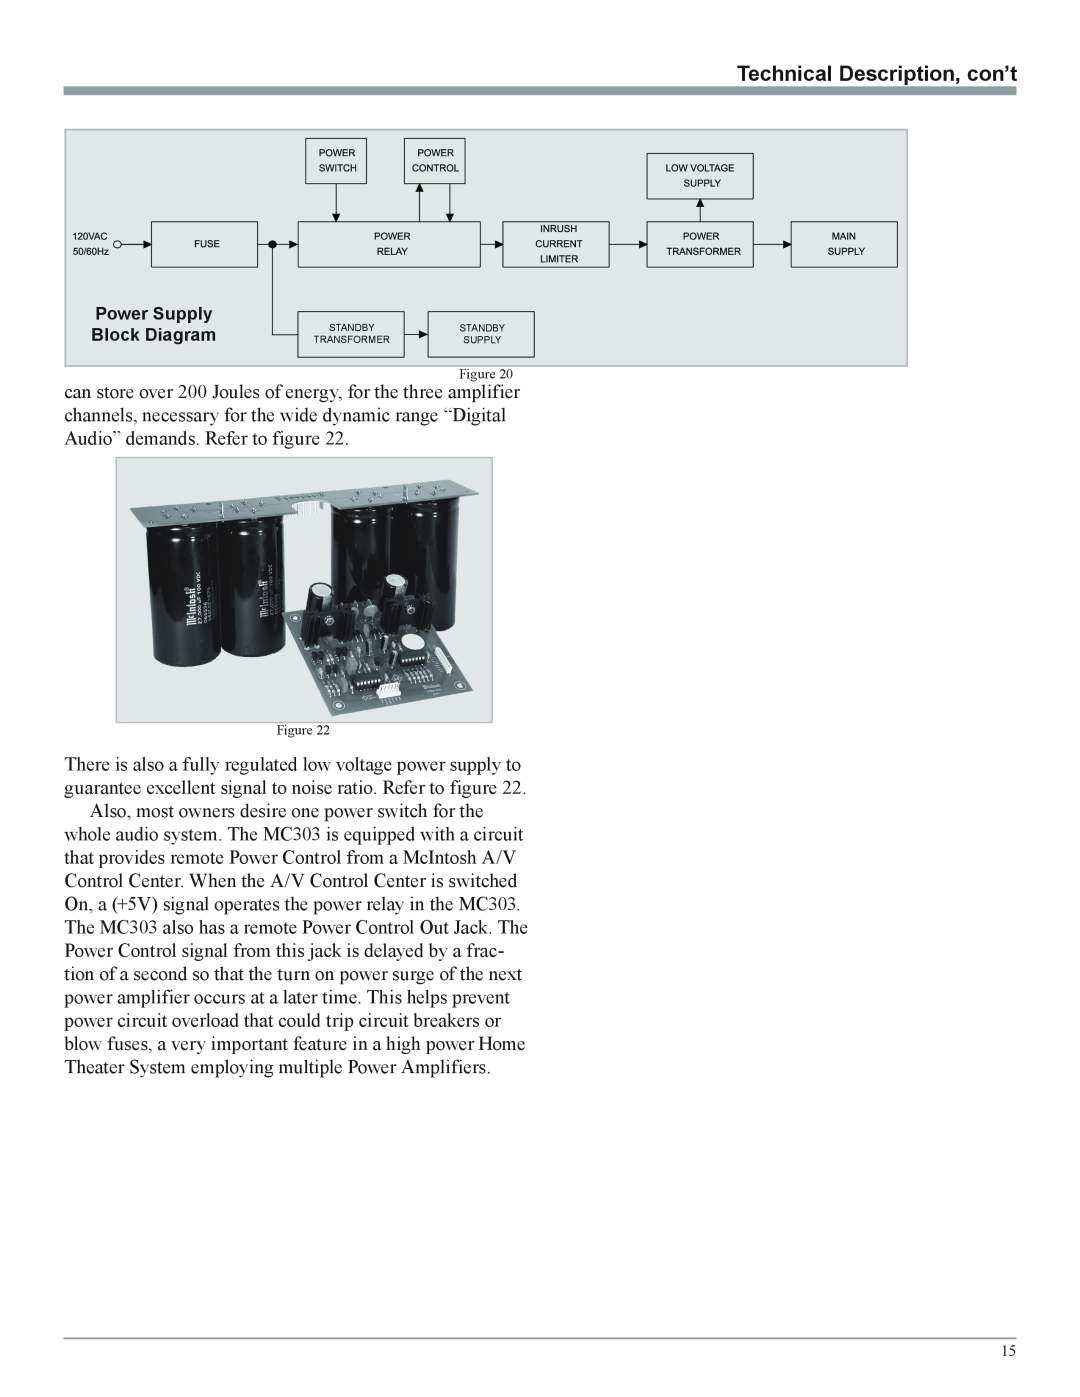 McIntosh MC303 owner manual Technical Description, con’t, Power Supply, Block Diagram 